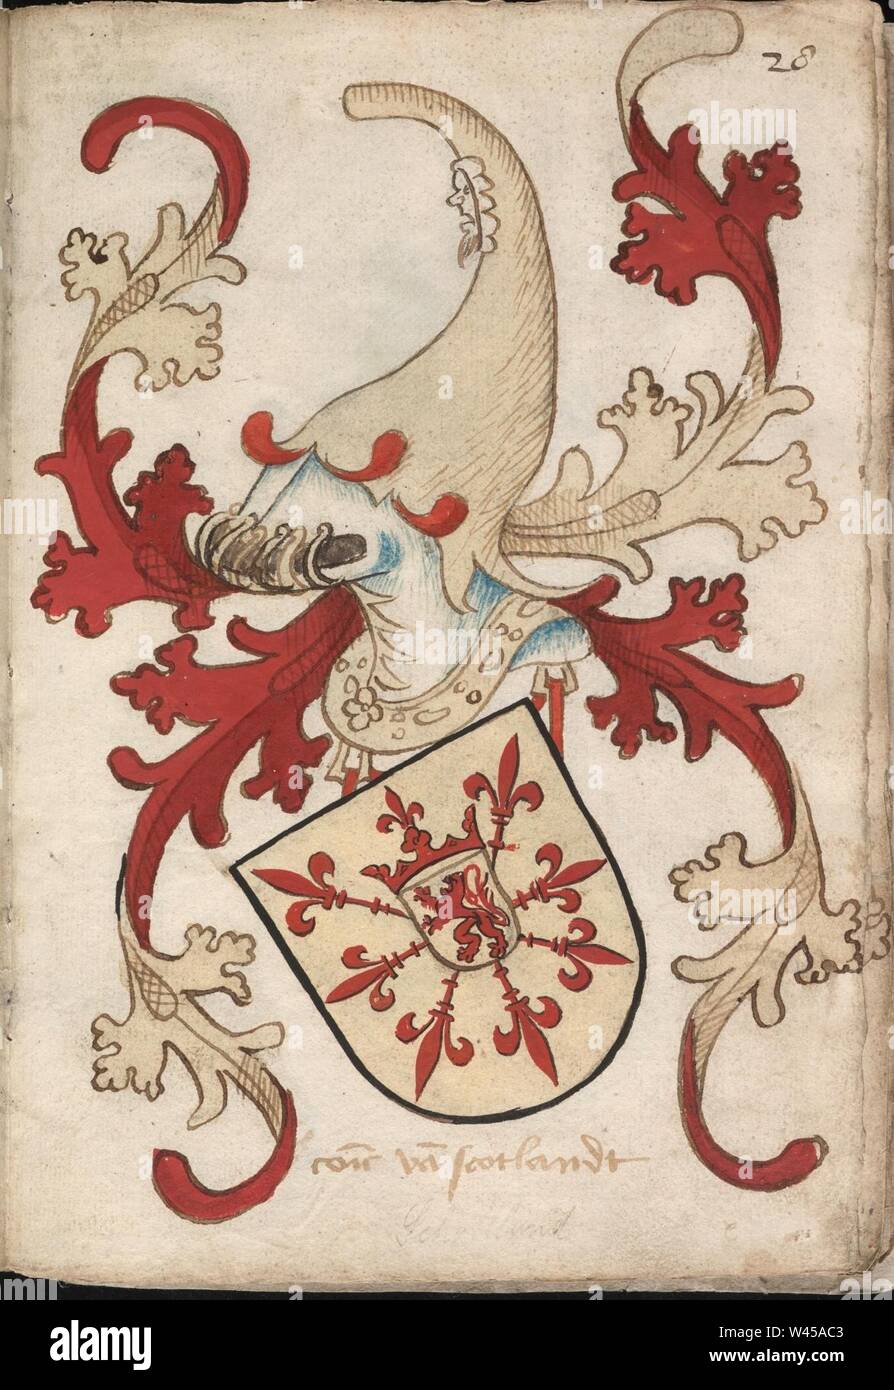 Coninc van Scotlandt - koning van Schotland - roi d'Ecosse - Wapenboek Nassau-Vianden - KB 1900 UN 016, folium 28r. Banque D'Images